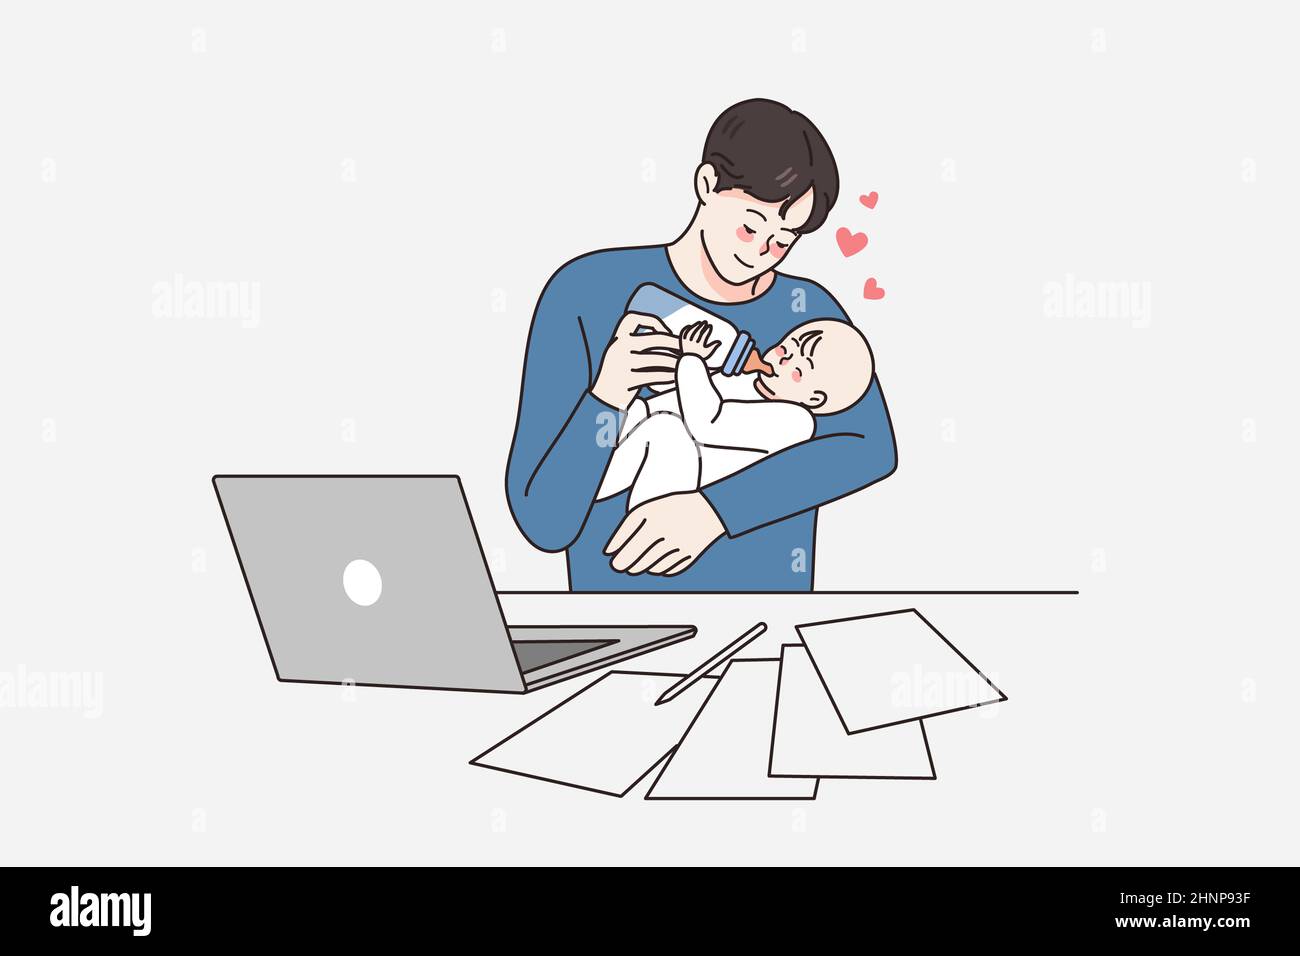 Happy parenthood and fatherhood concept. Stock Photo